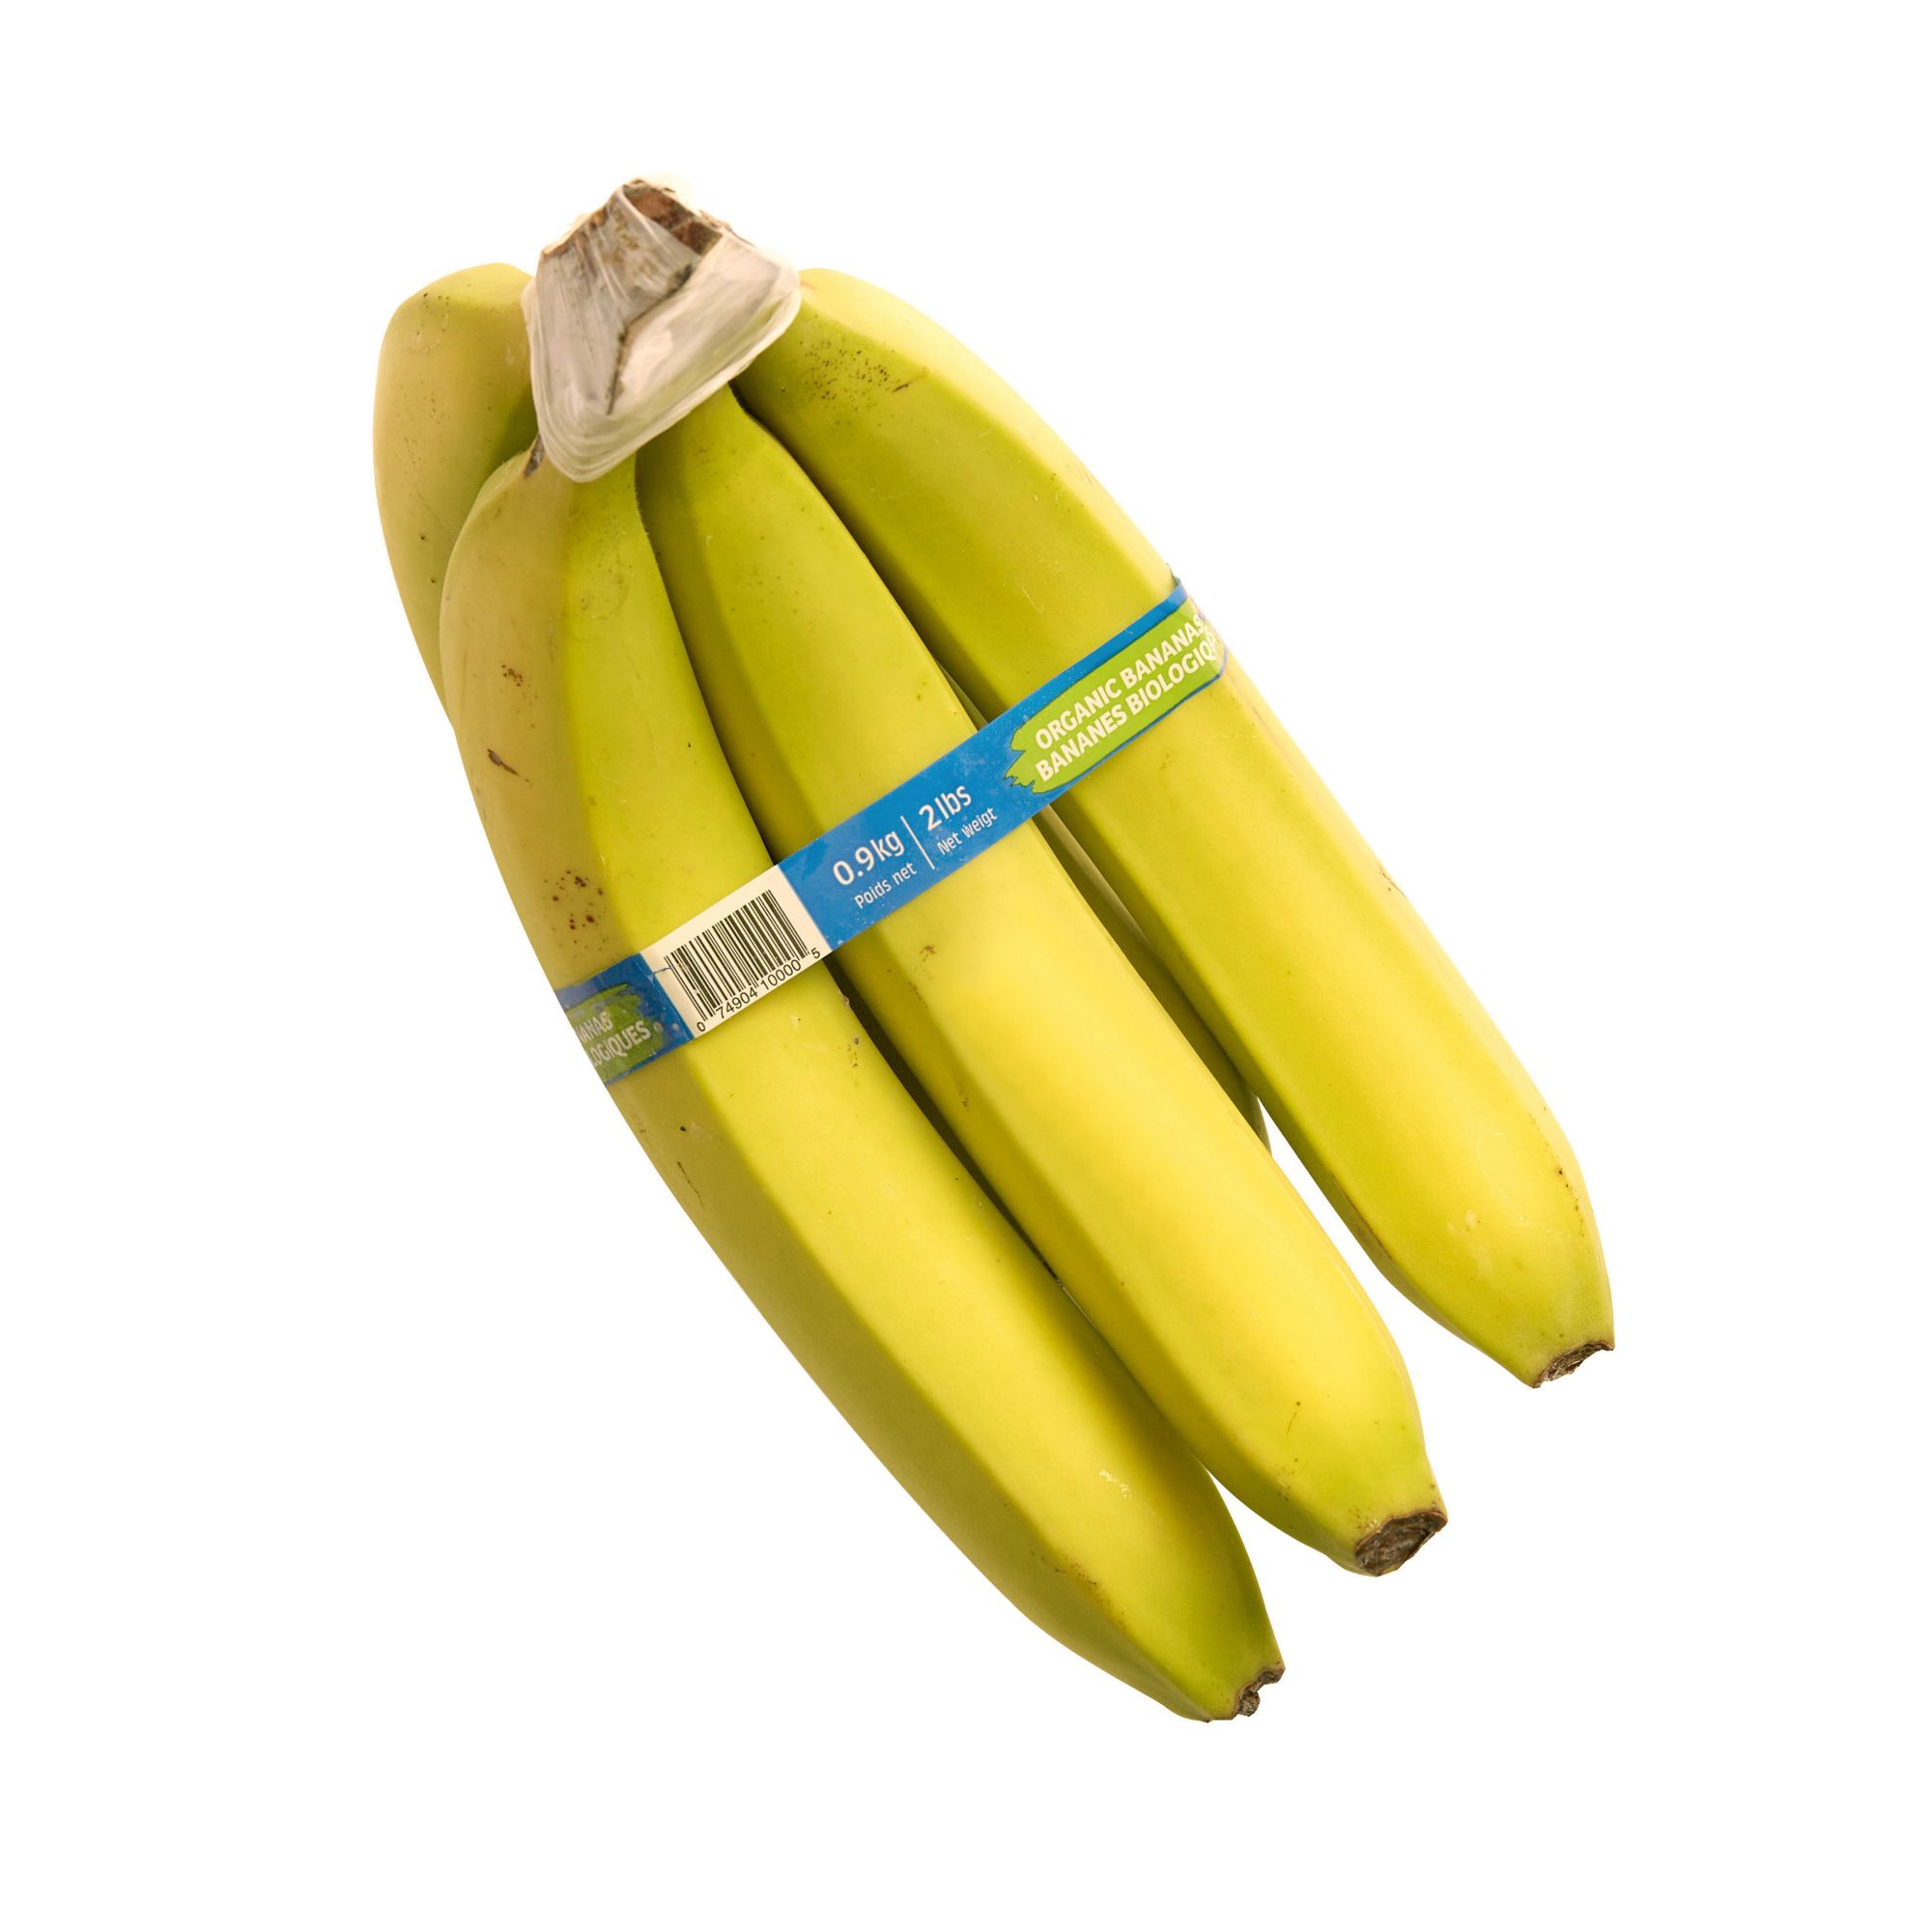 Bananes 40 lb - Banane